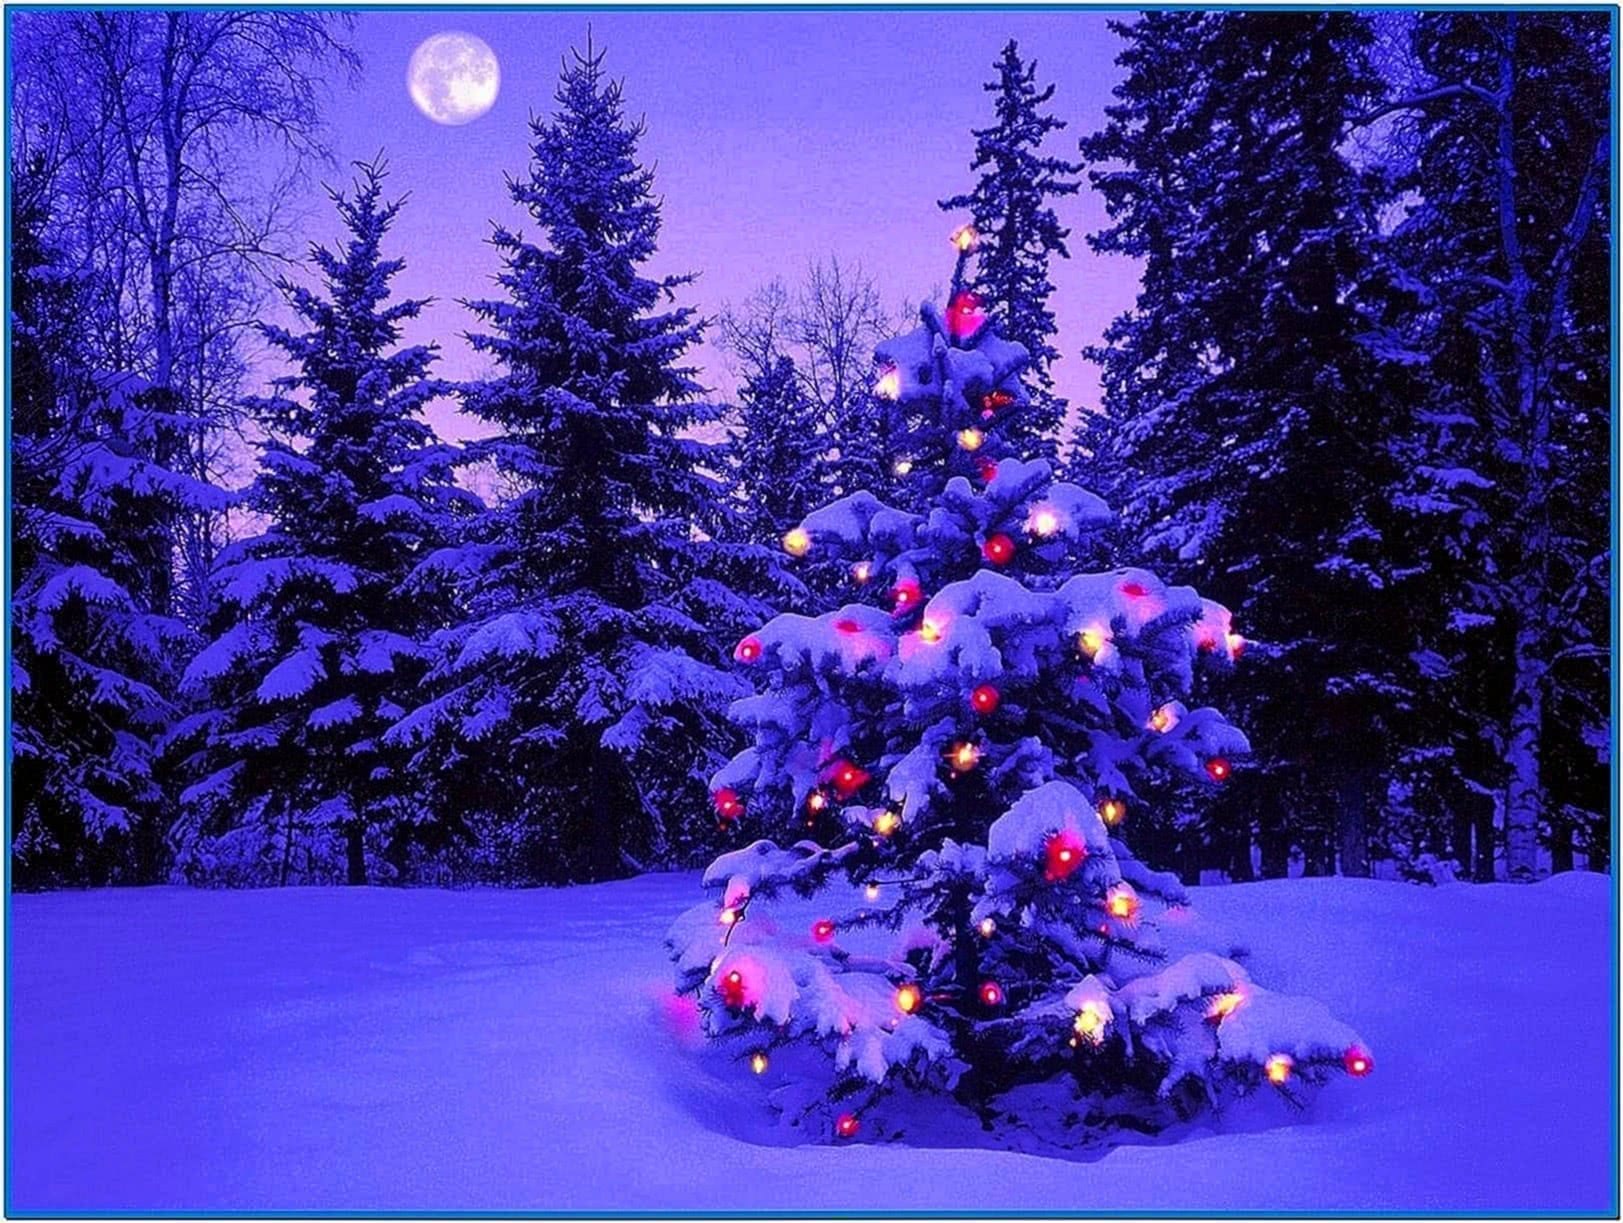 Snowy christmas screensaver - Download free